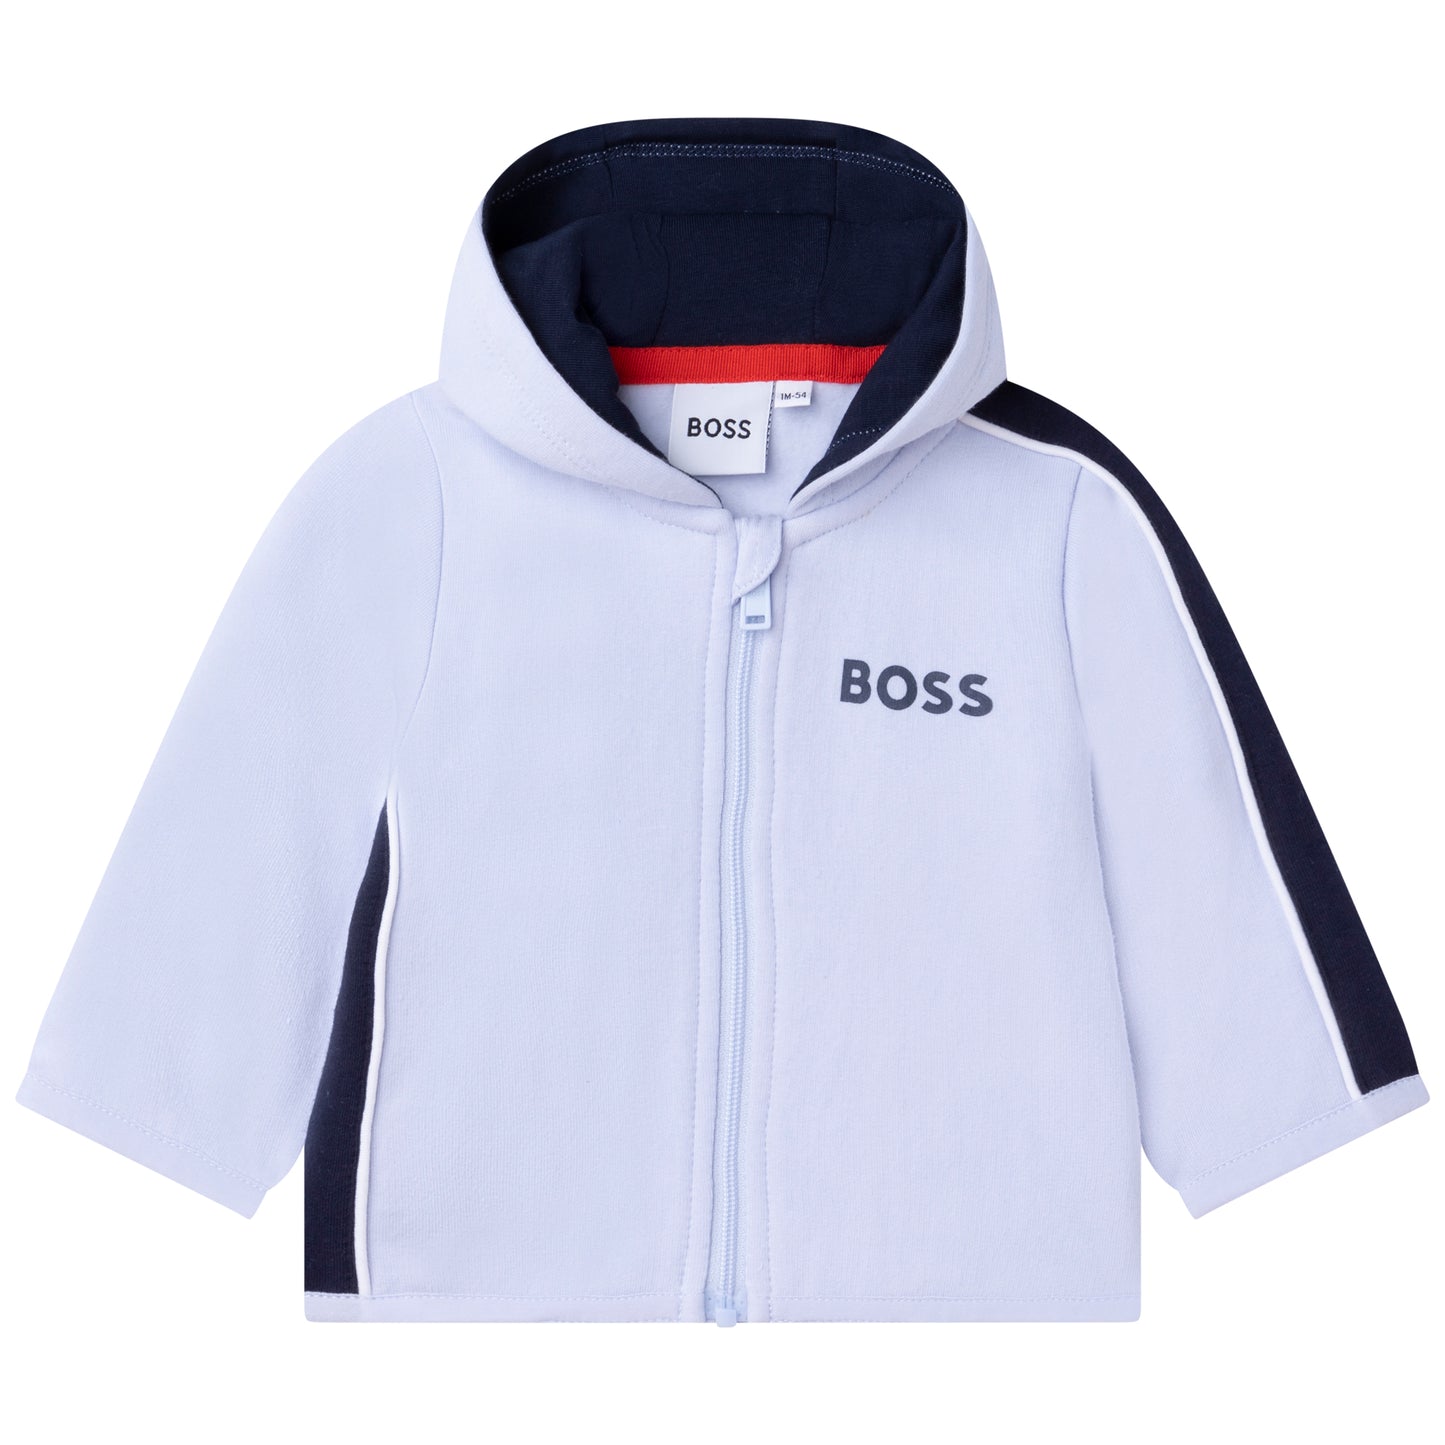 Hugo Boss Baby T-Shirt & Track Suit Set _Pale Blue J98369-771